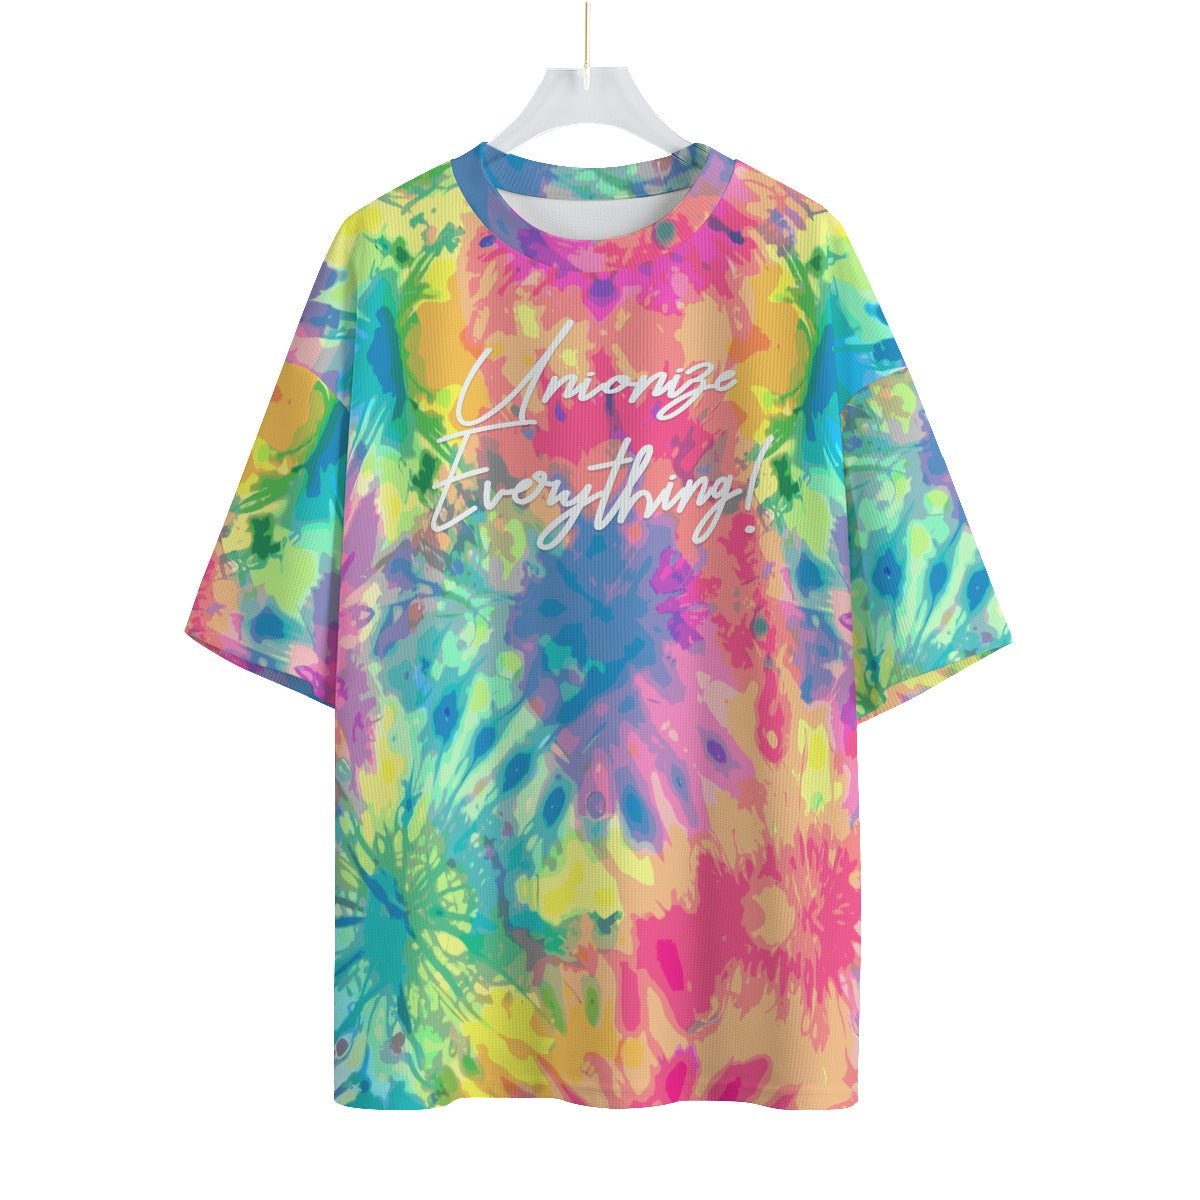 'Unionize Everything!' Tie-Dye Drop-shoulder T-shirt | CANAANWEAR | T-Shirt |